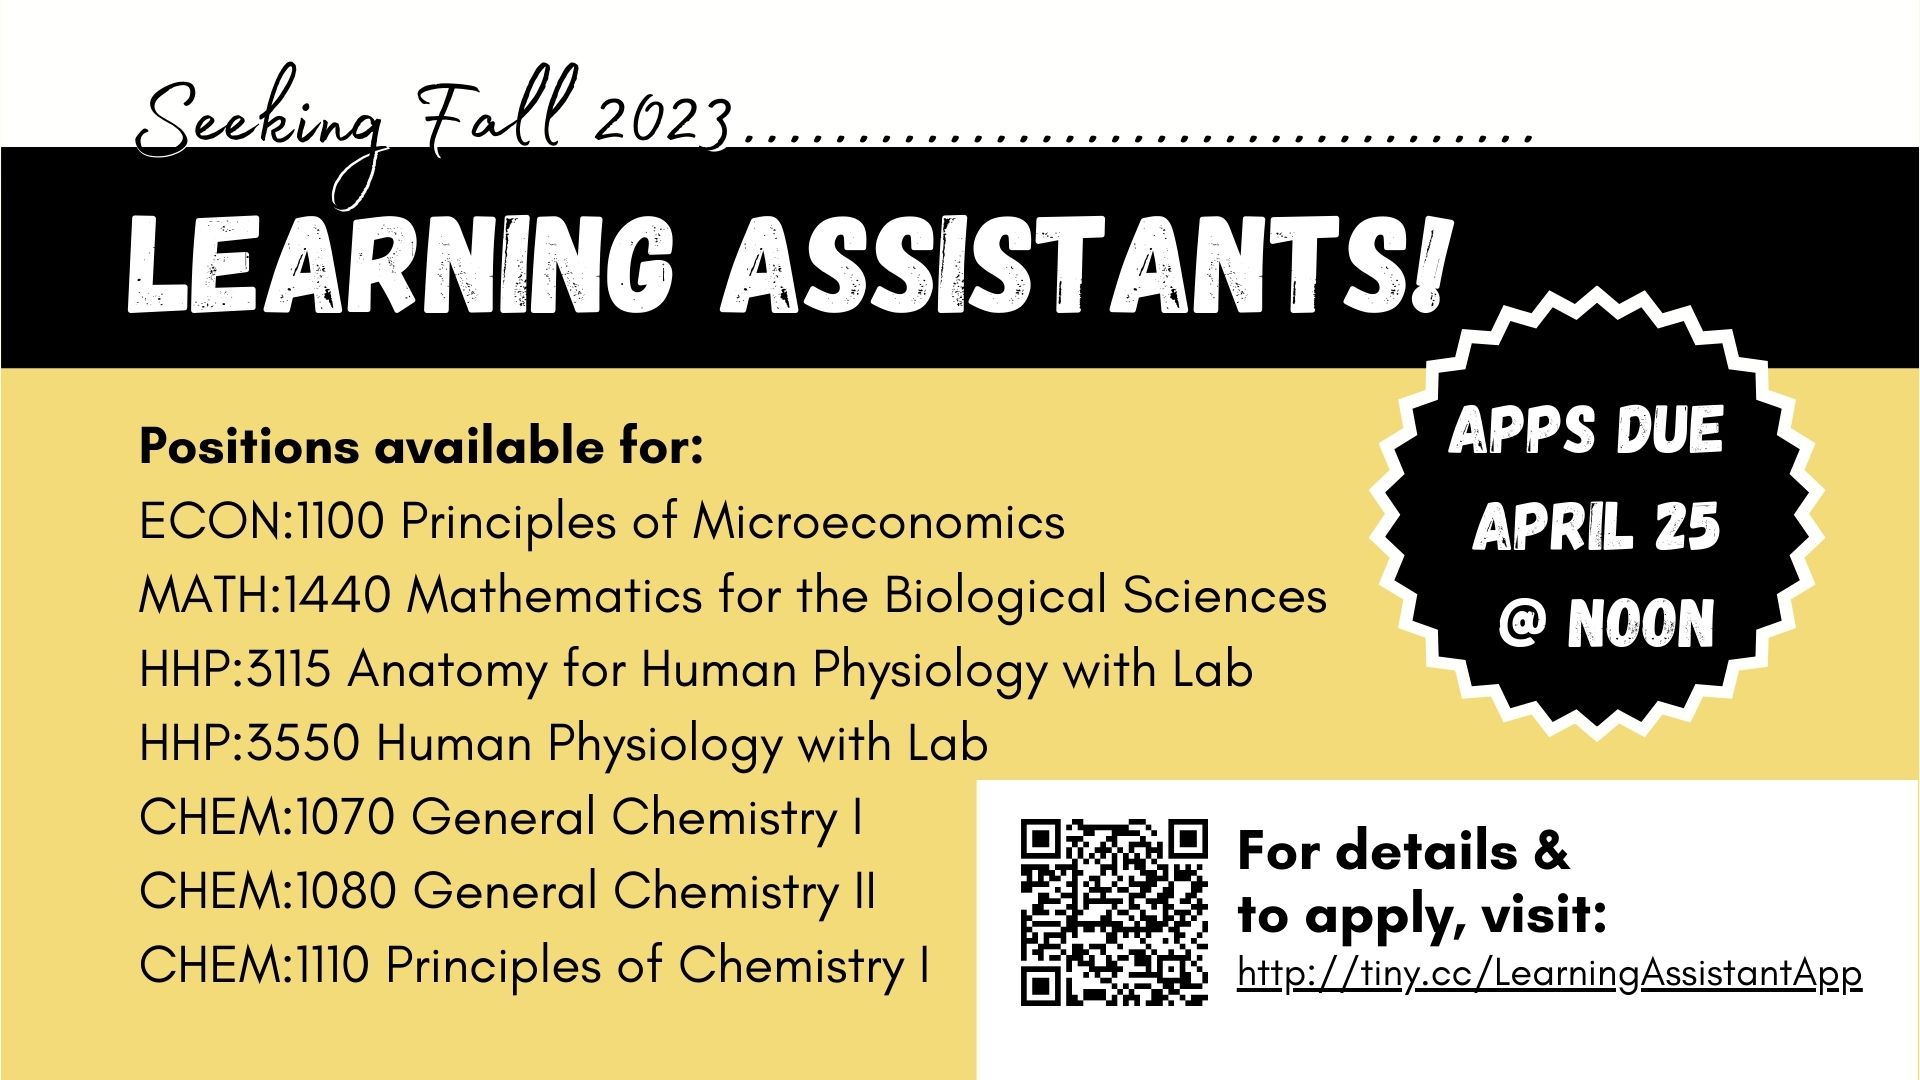 Seeking Fall 2023 Learning Assistant!